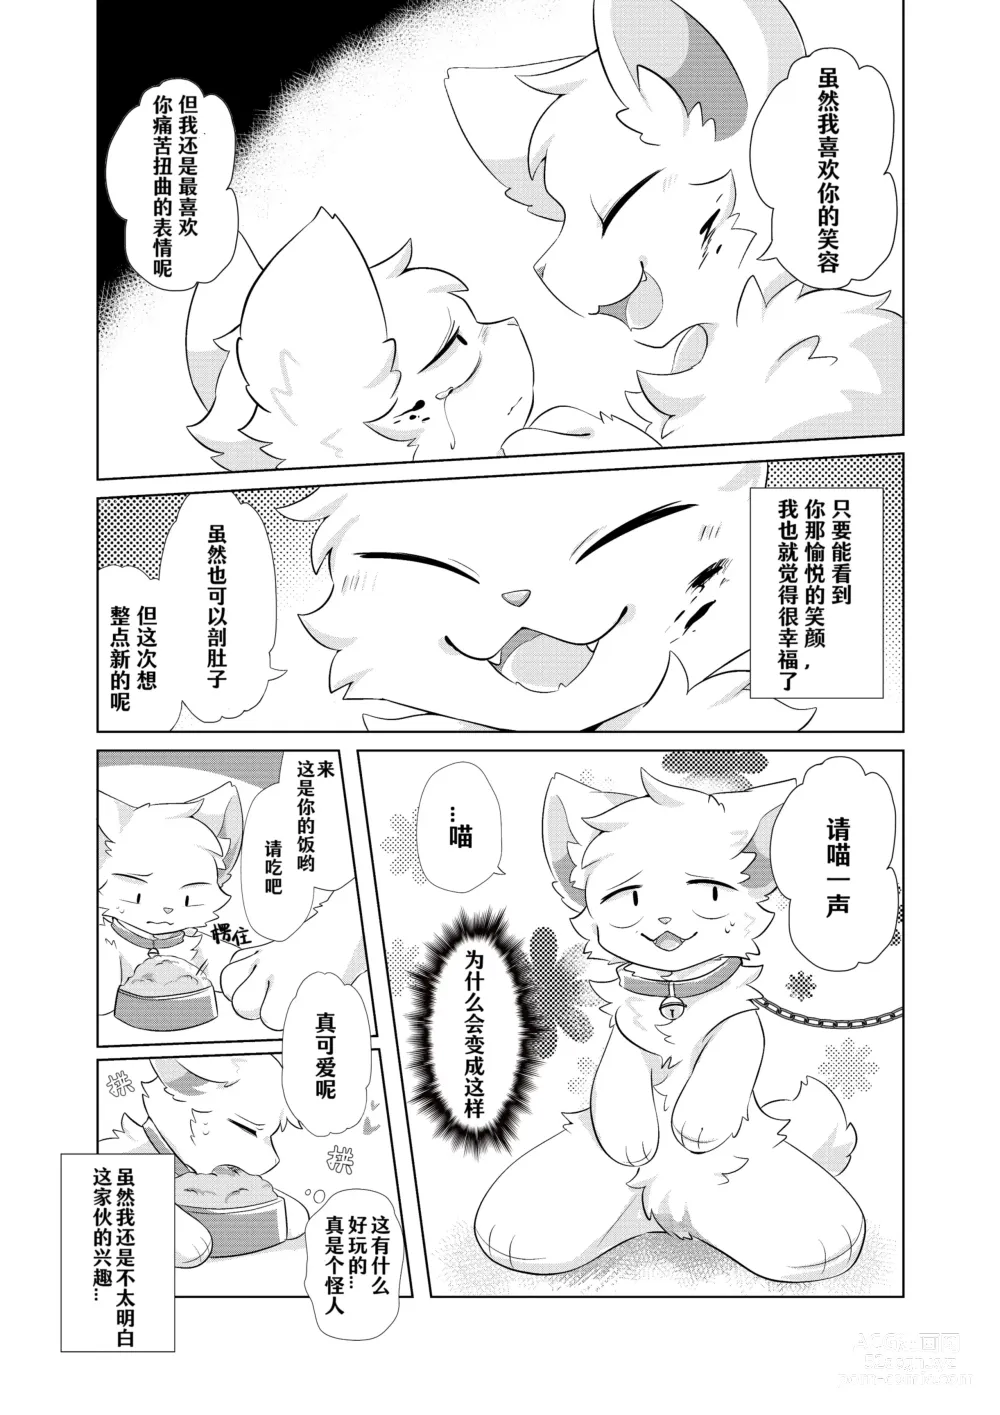 Page 66 of doujinshi 在生命长途中，与你携手同行！